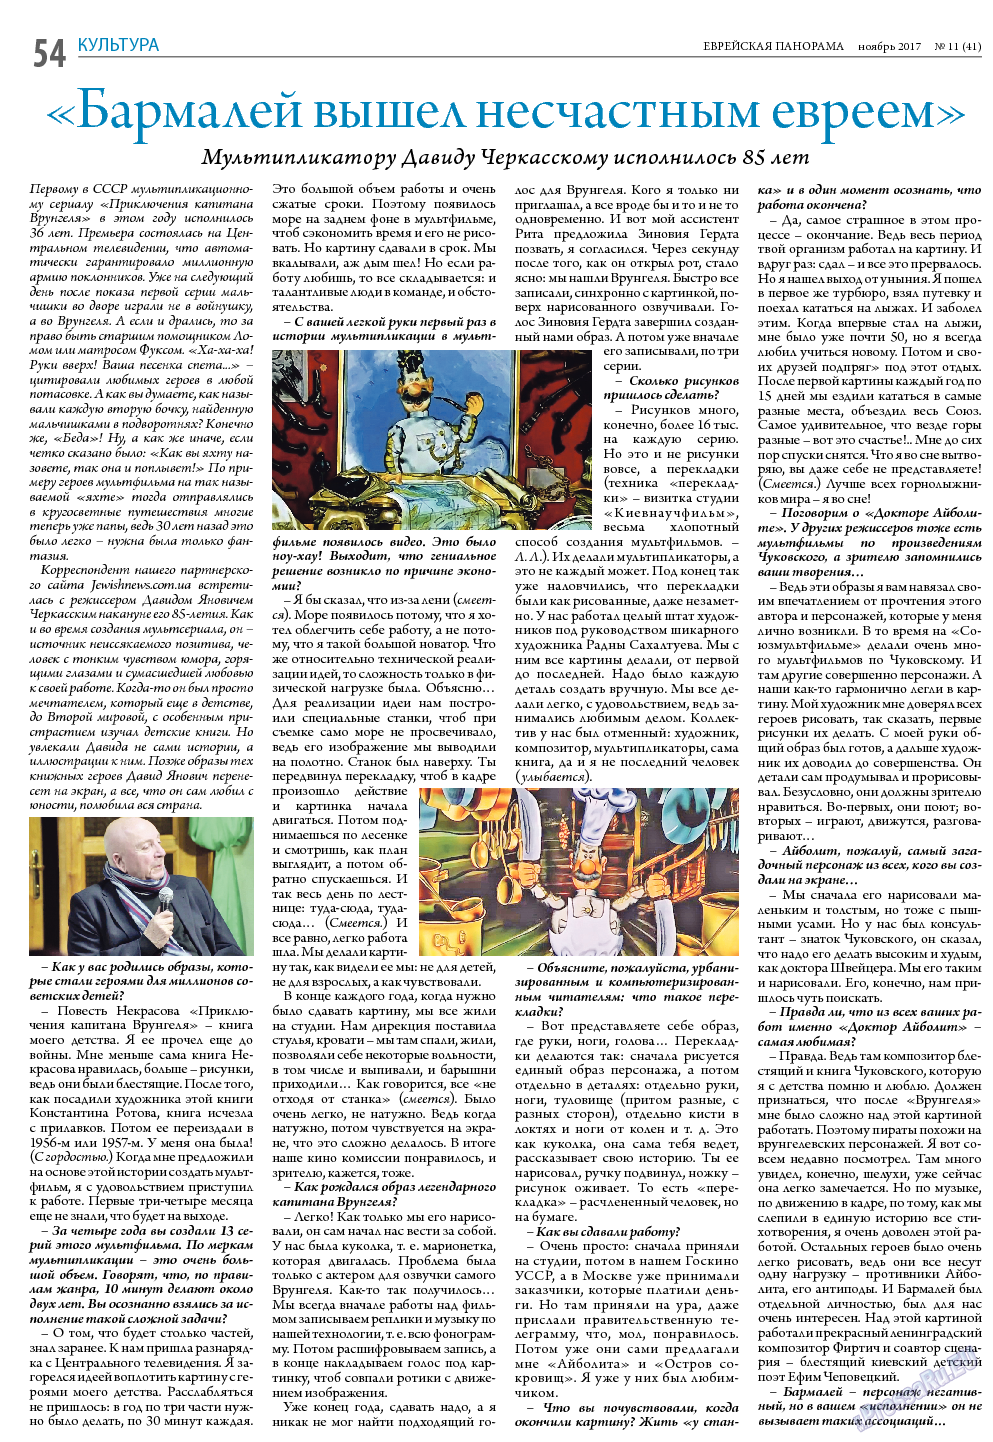 Еврейская панорама, газета. 2017 №11 стр.54